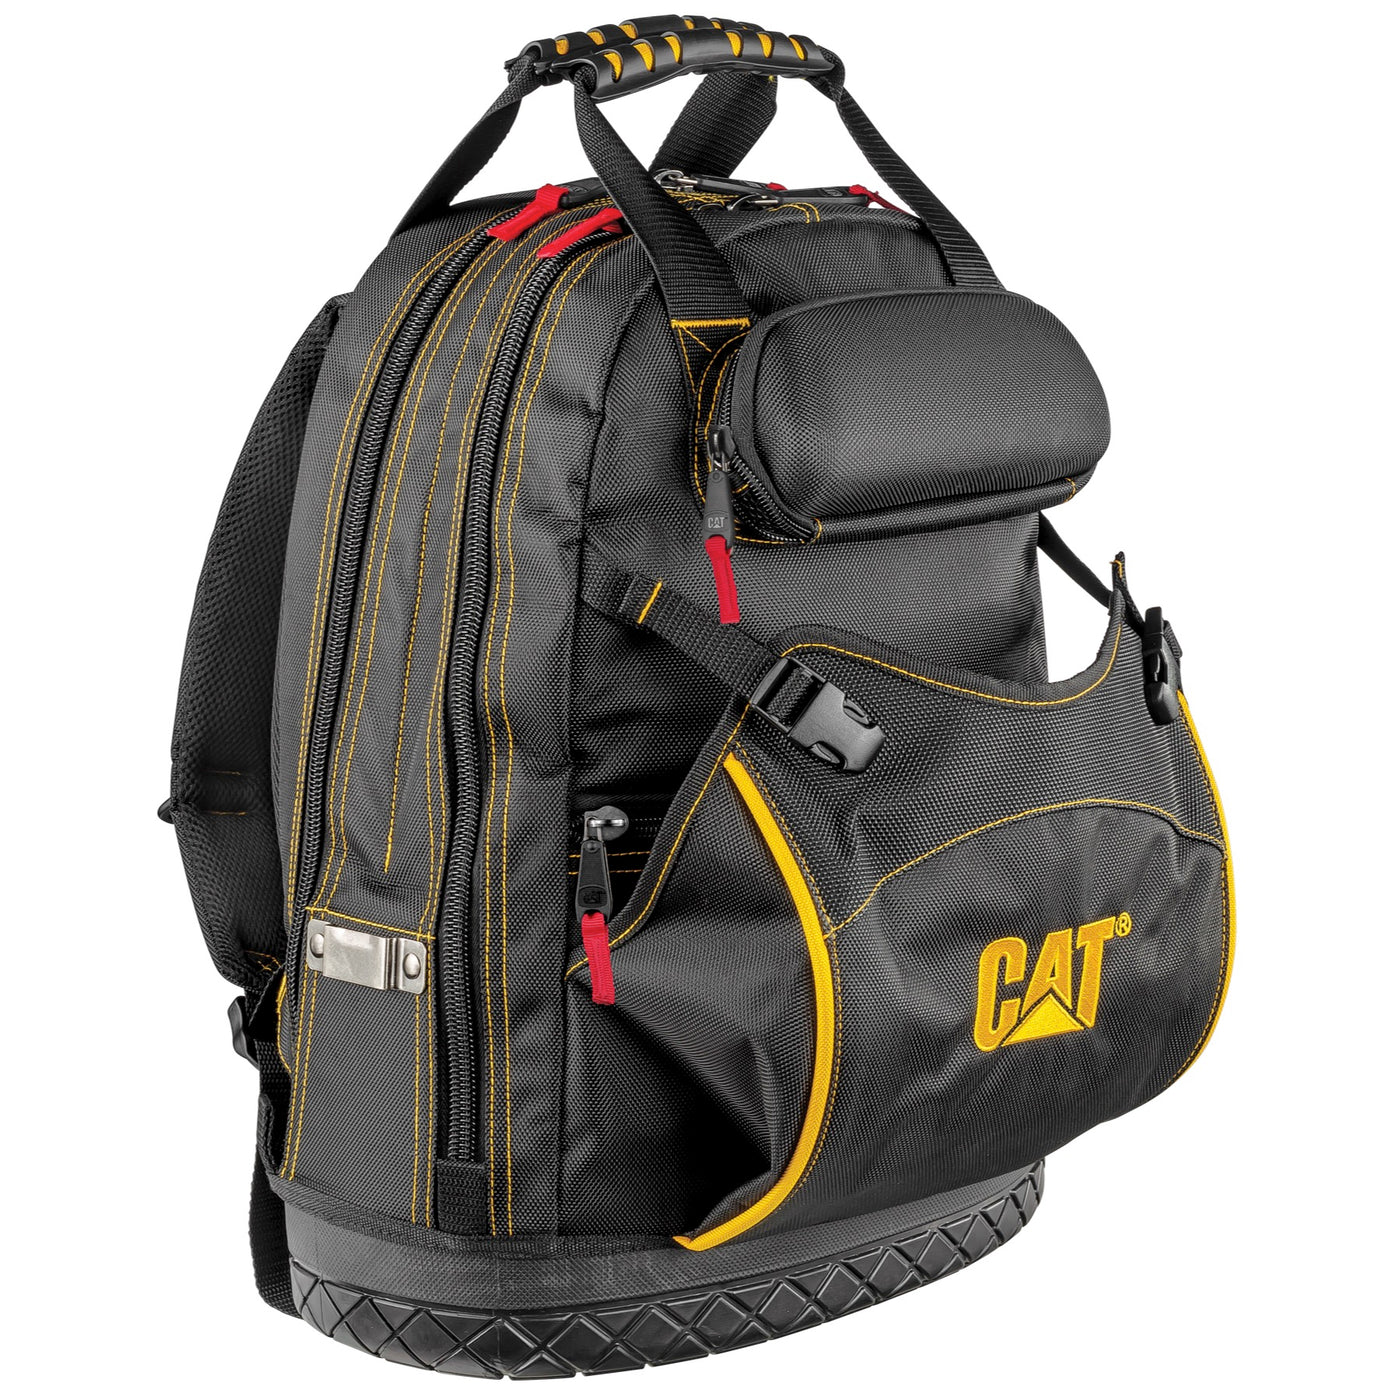 Officially Licensed MLB Texas Rangers 18 Premium Tool Bag Backpack